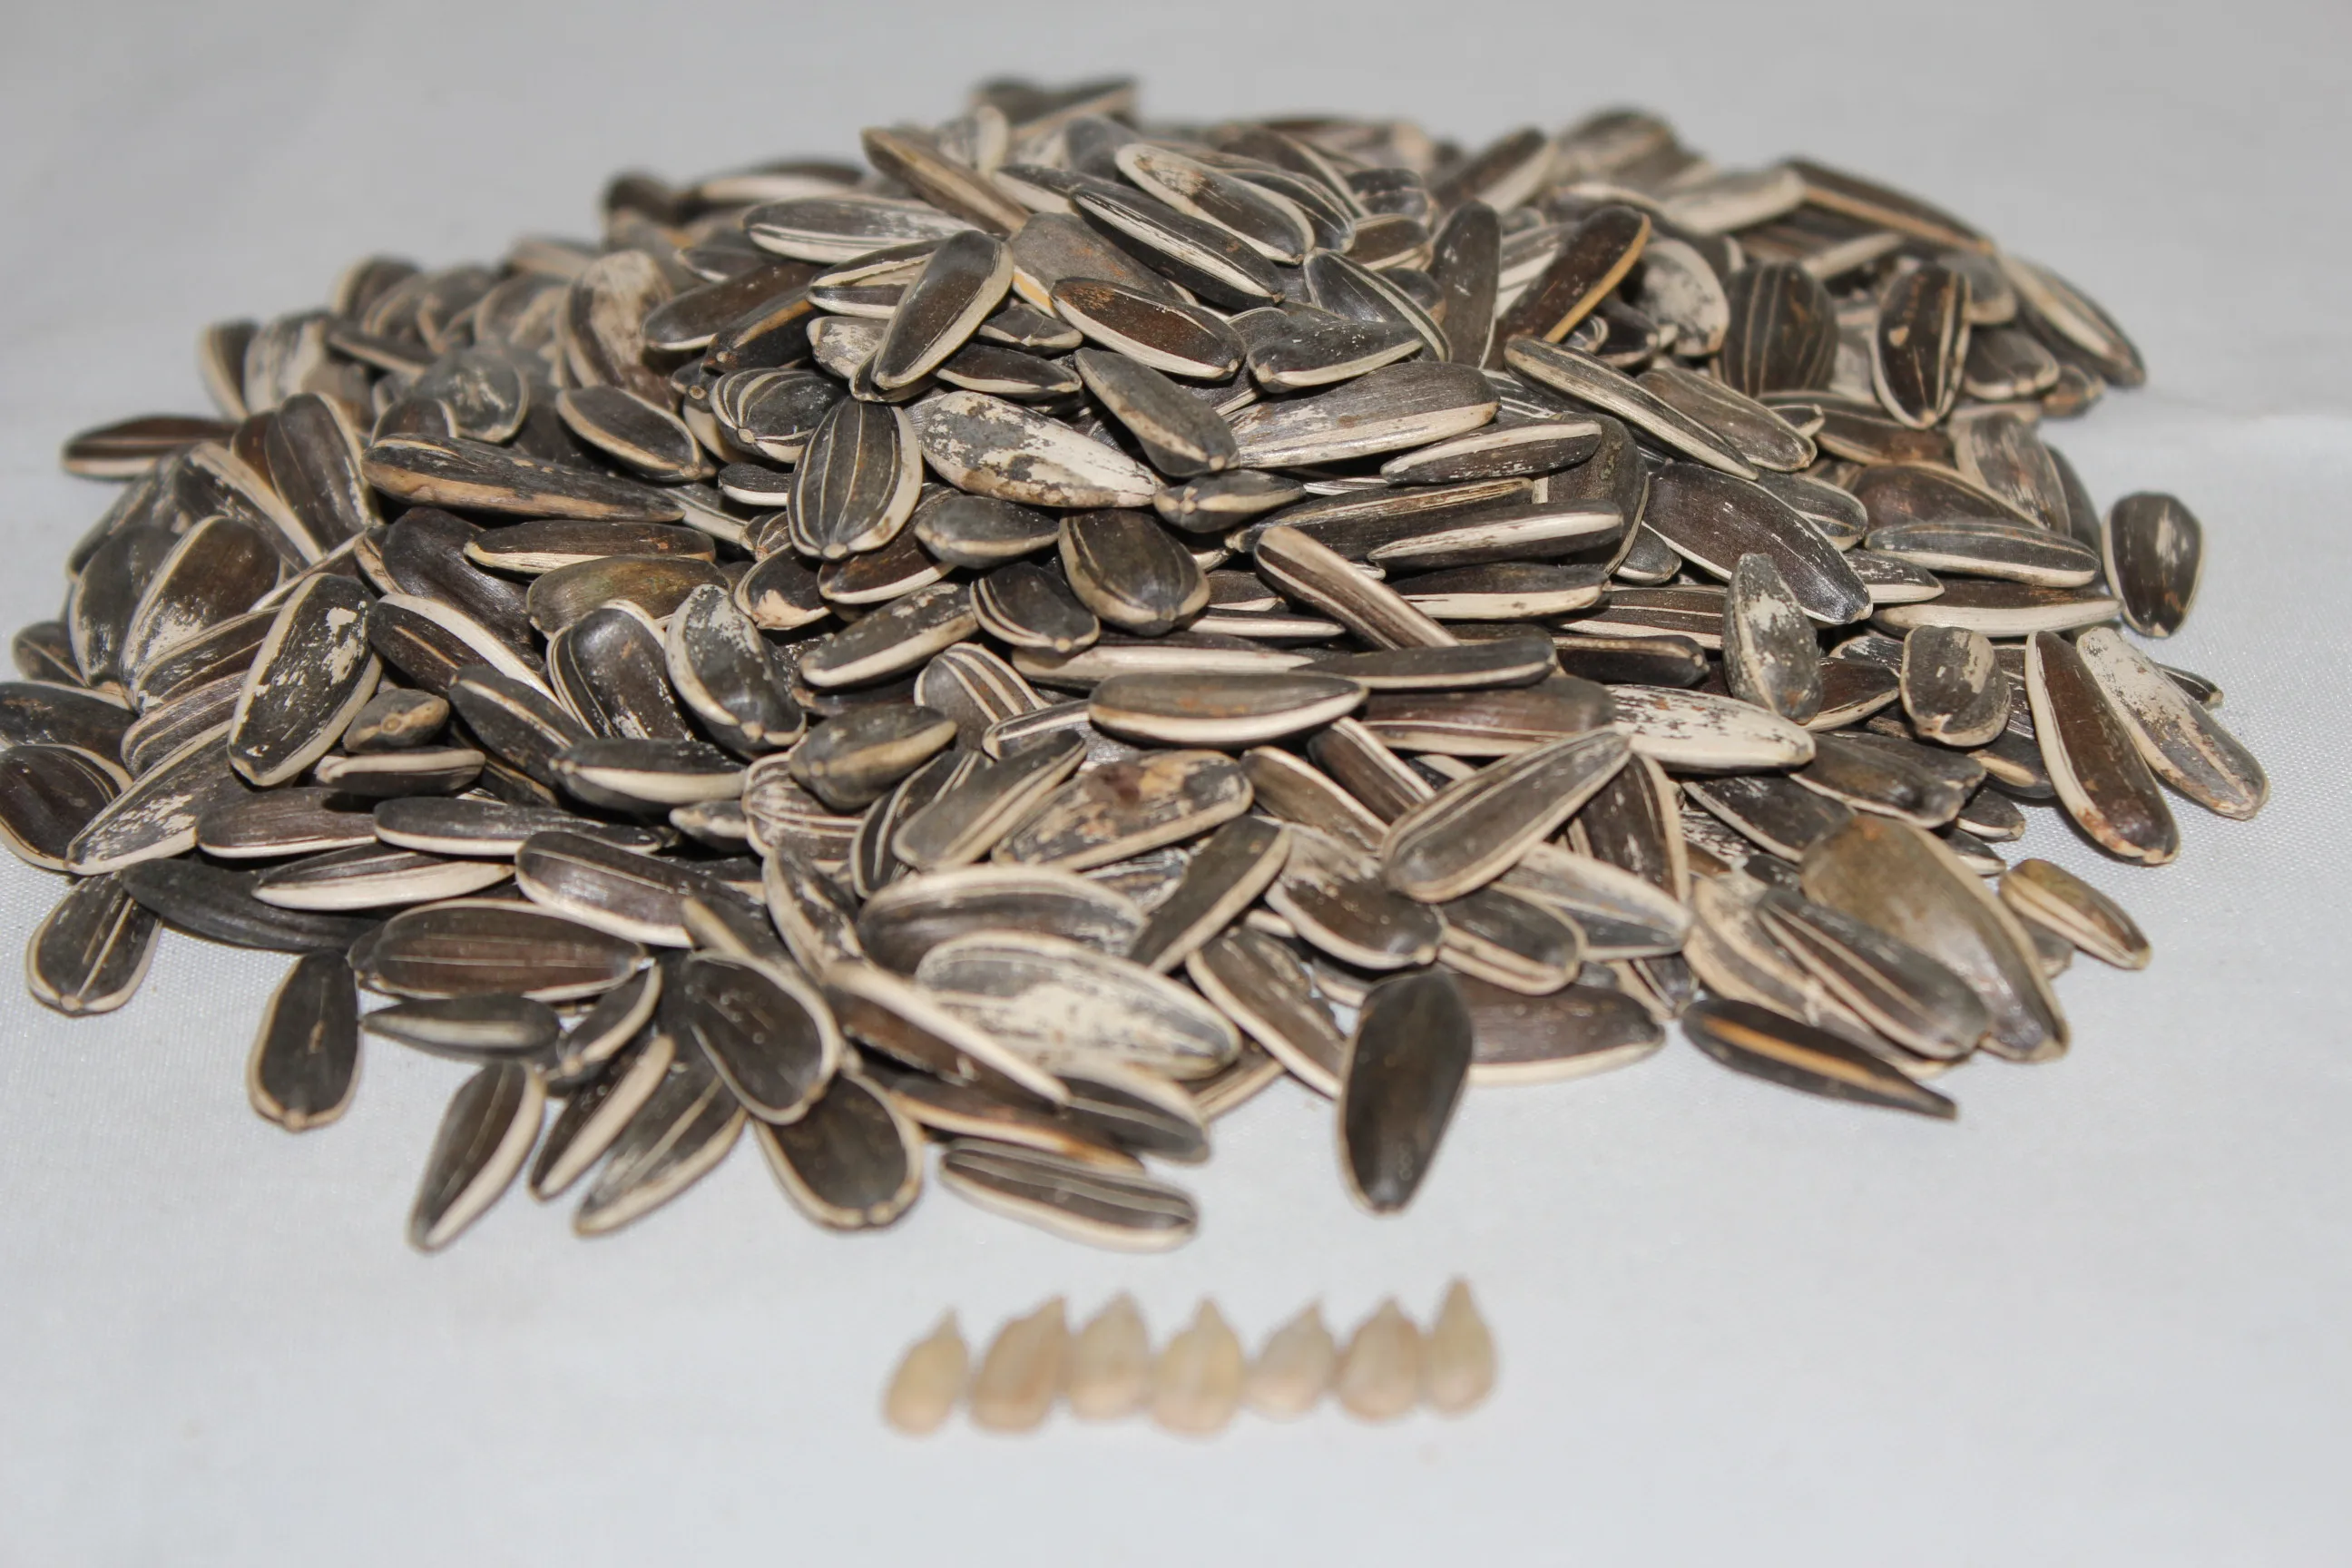 
chinese sunflower seeds Wholesale raw black Sunflower Seeds flower seed 